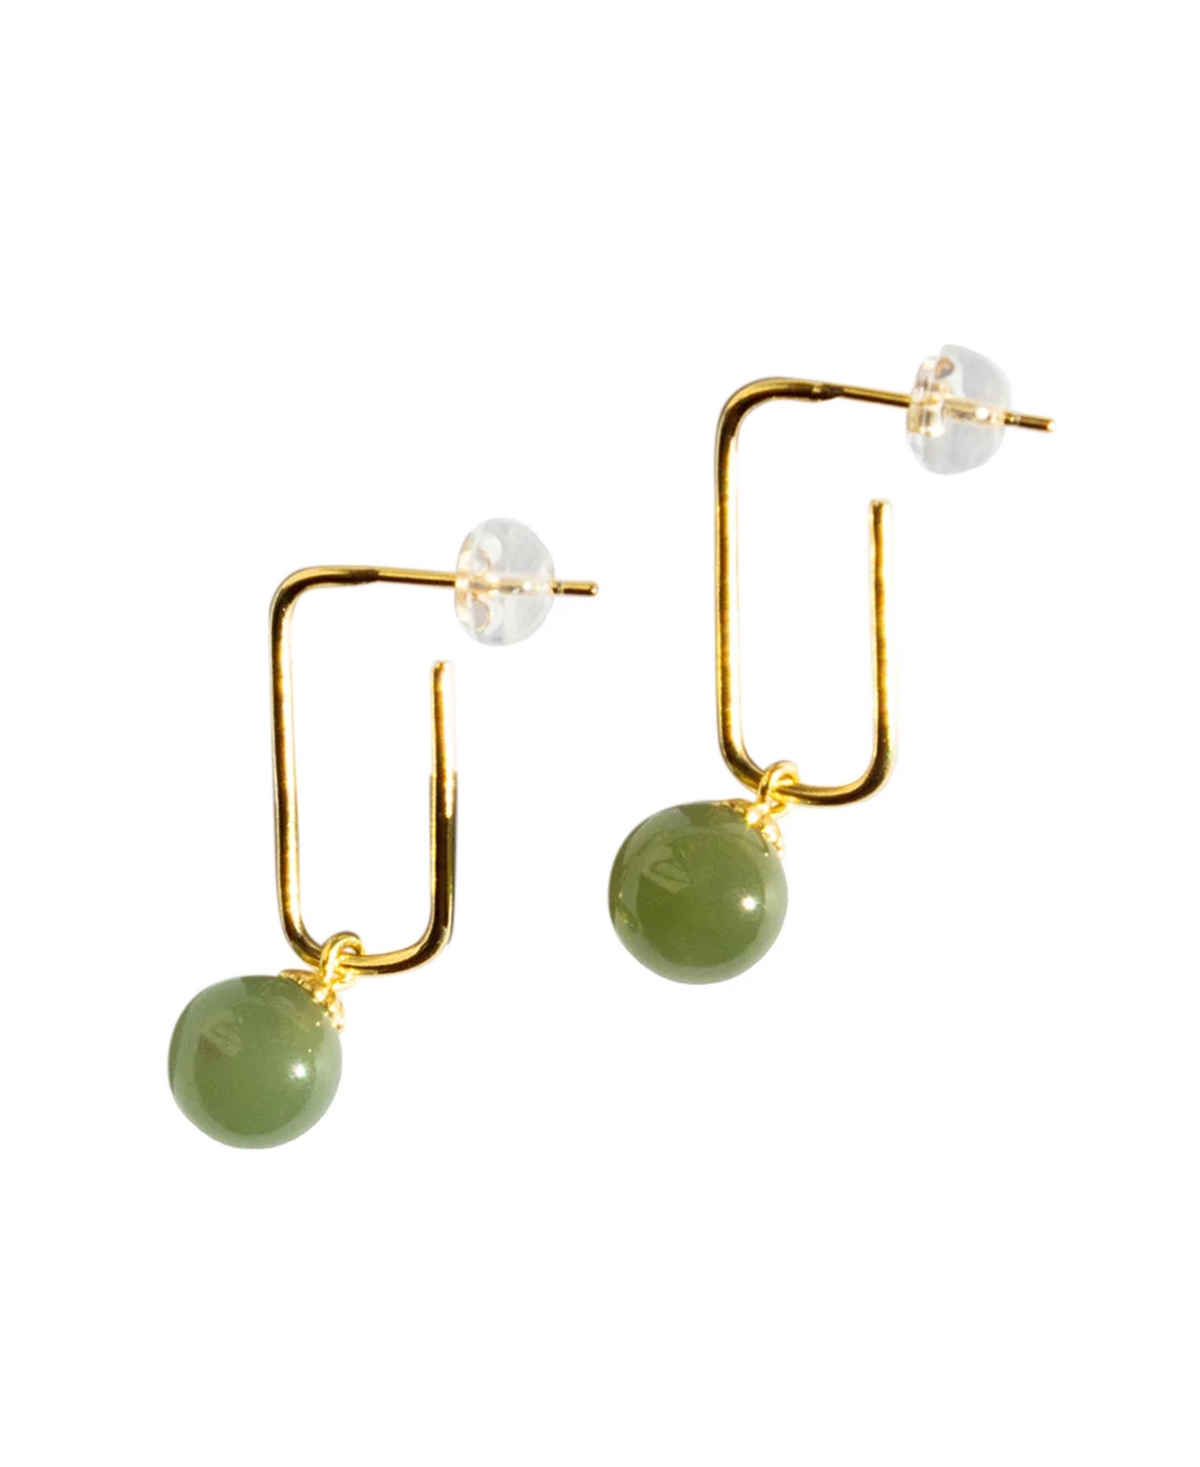 Pin - Green jade bead gold earrings - Green